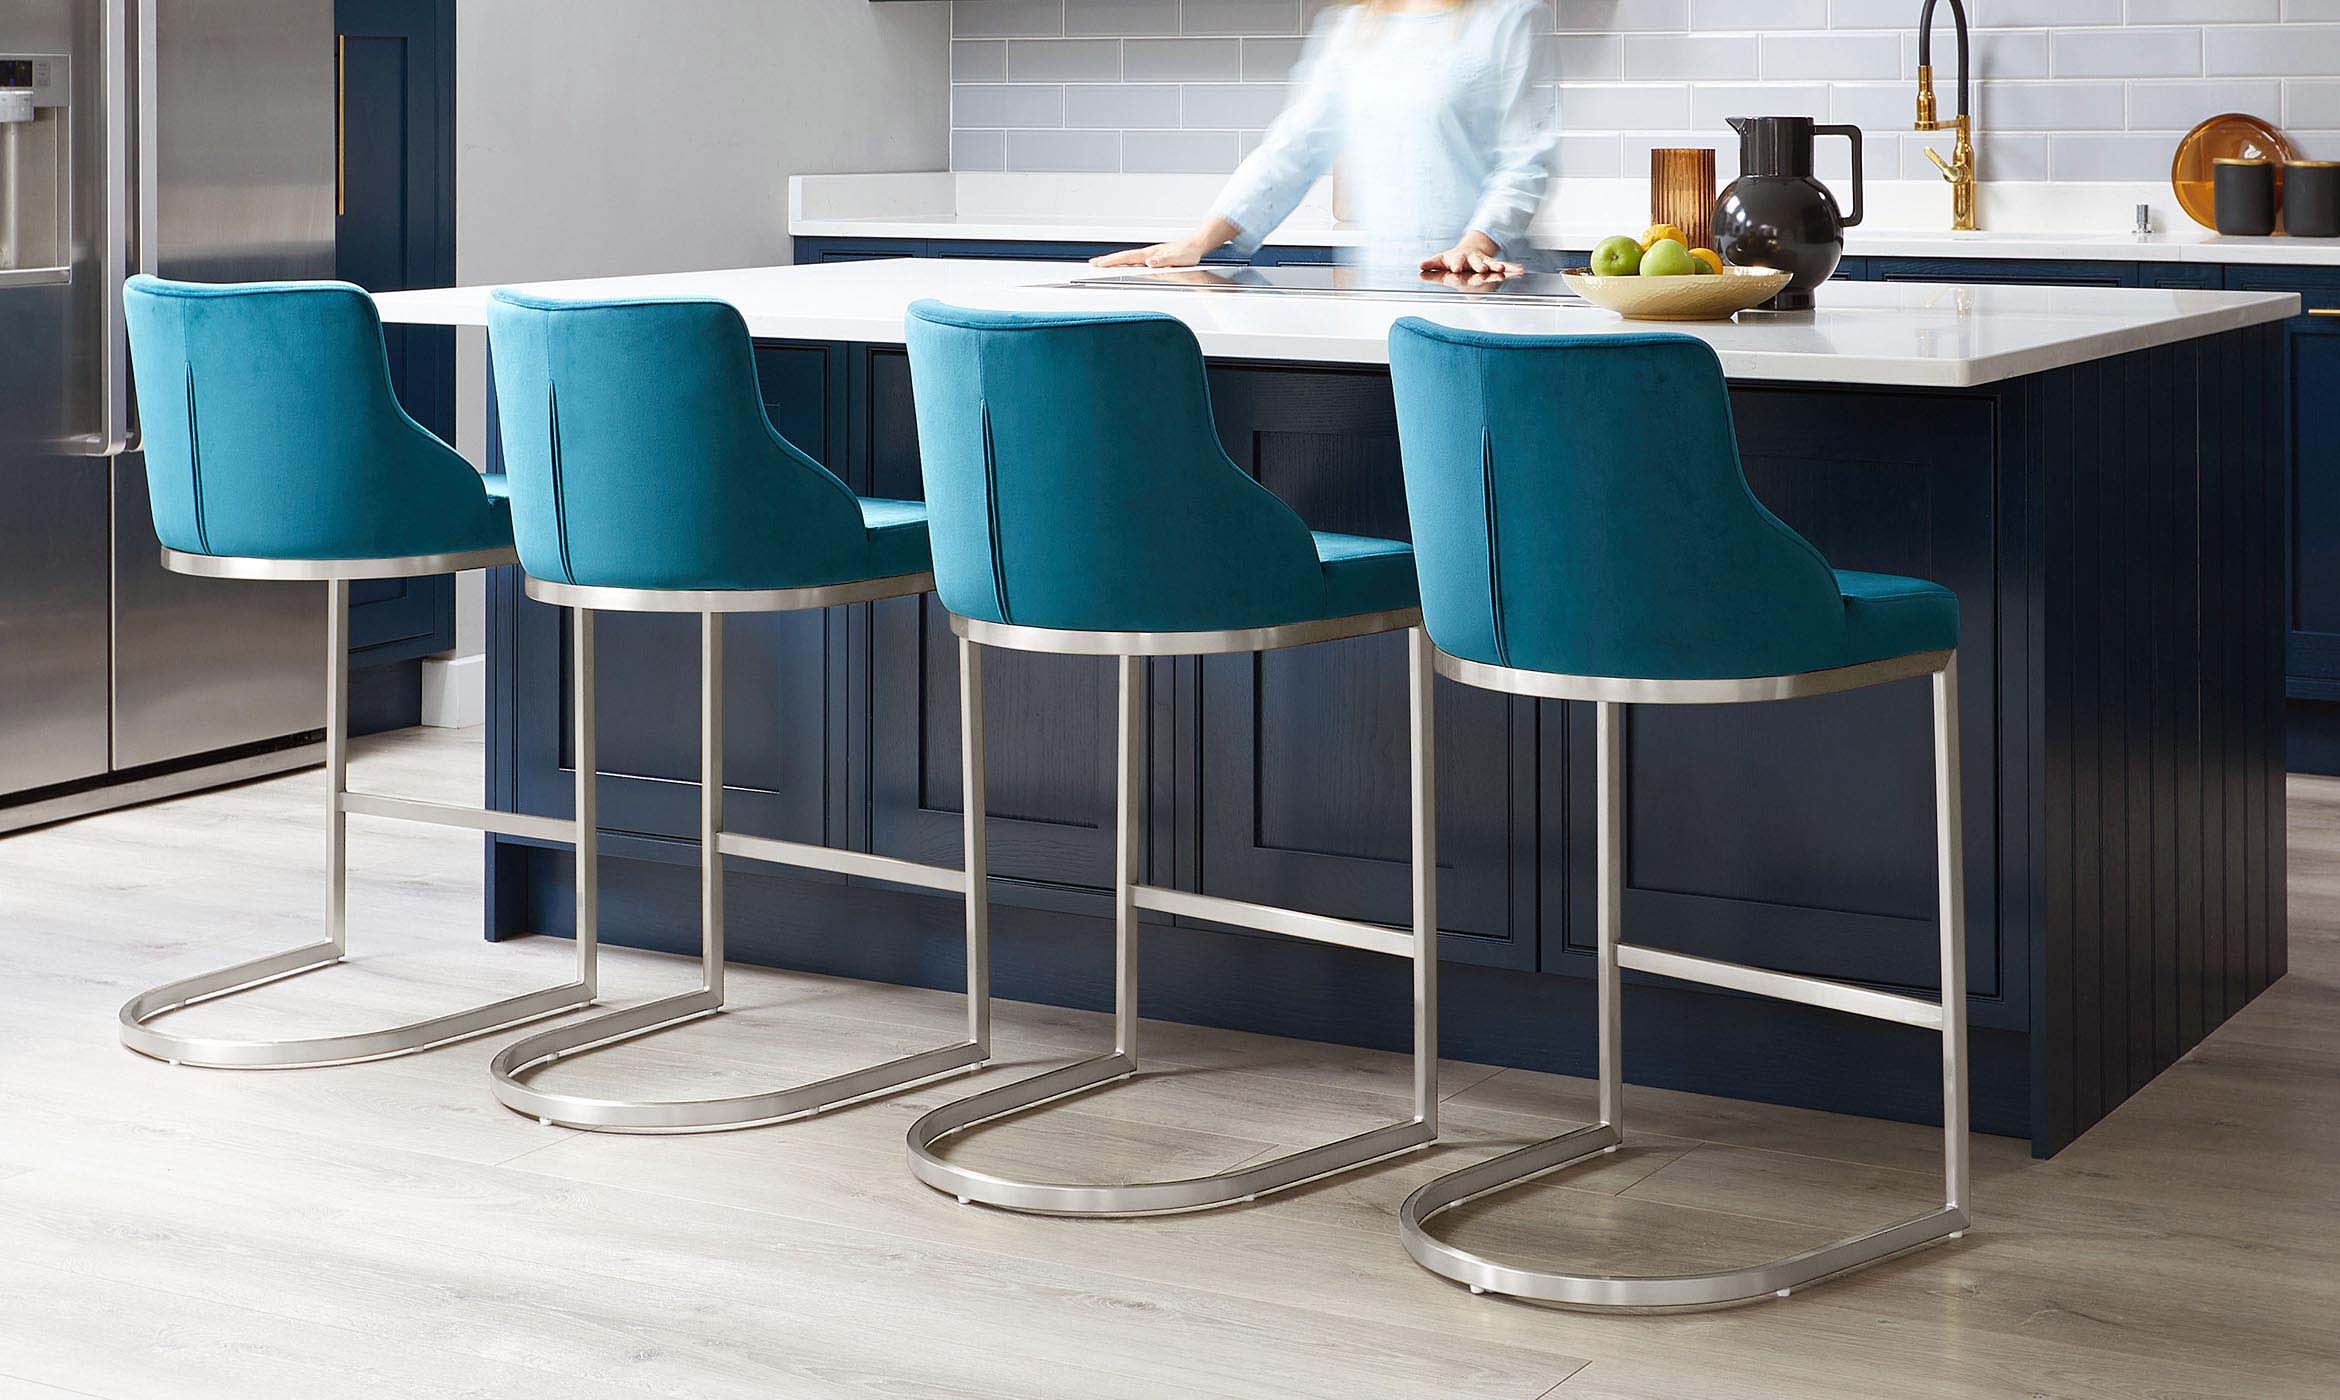 teal espresso bar stools kitchen